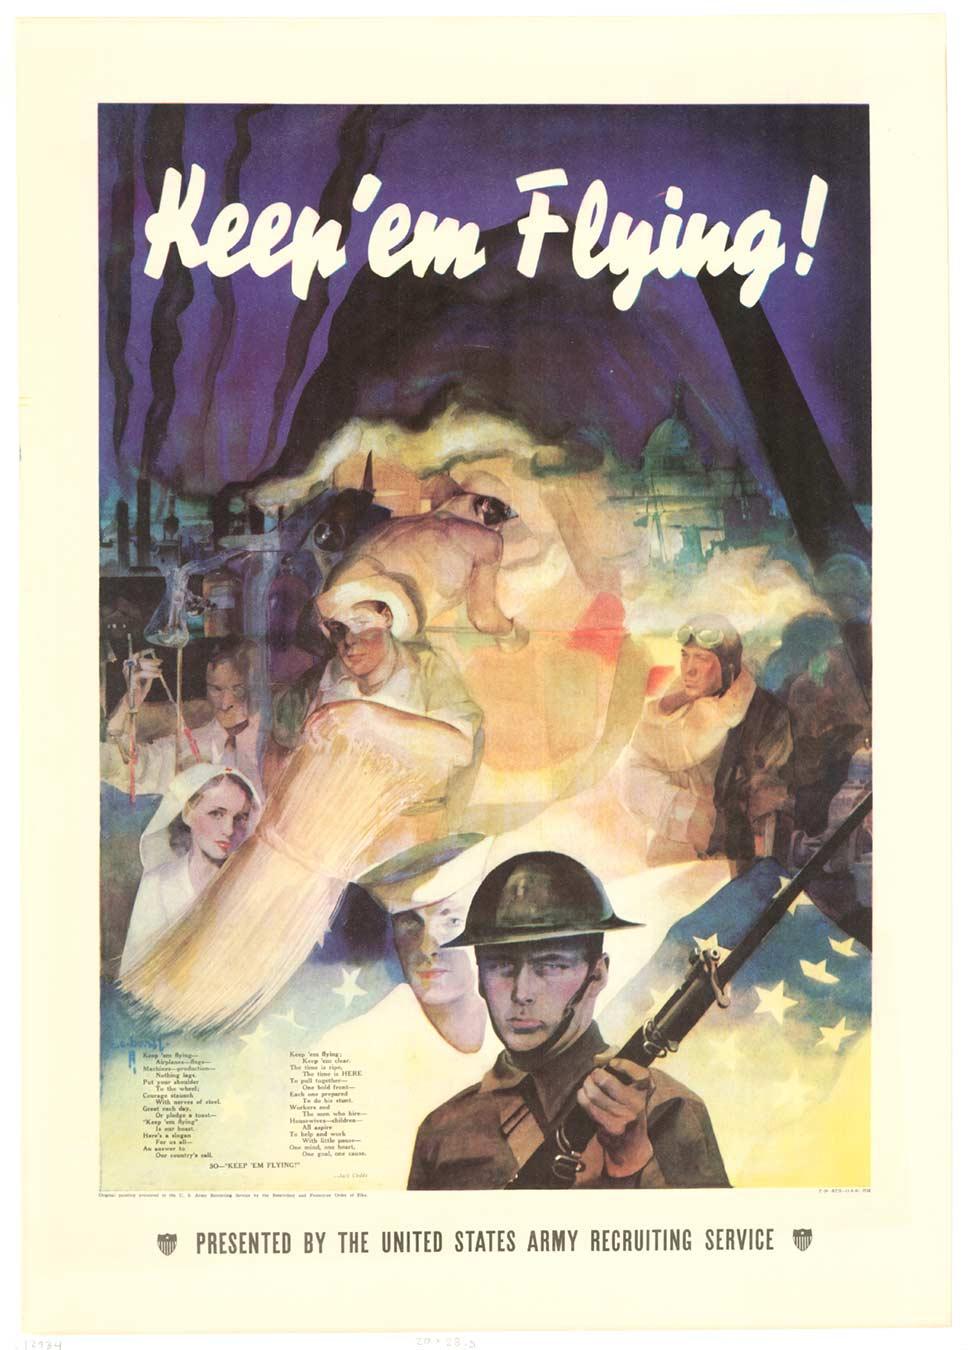 Cecil Calvert Beall Figurative Print - Original "Keep 'em Flying!" vintage poster, 1941